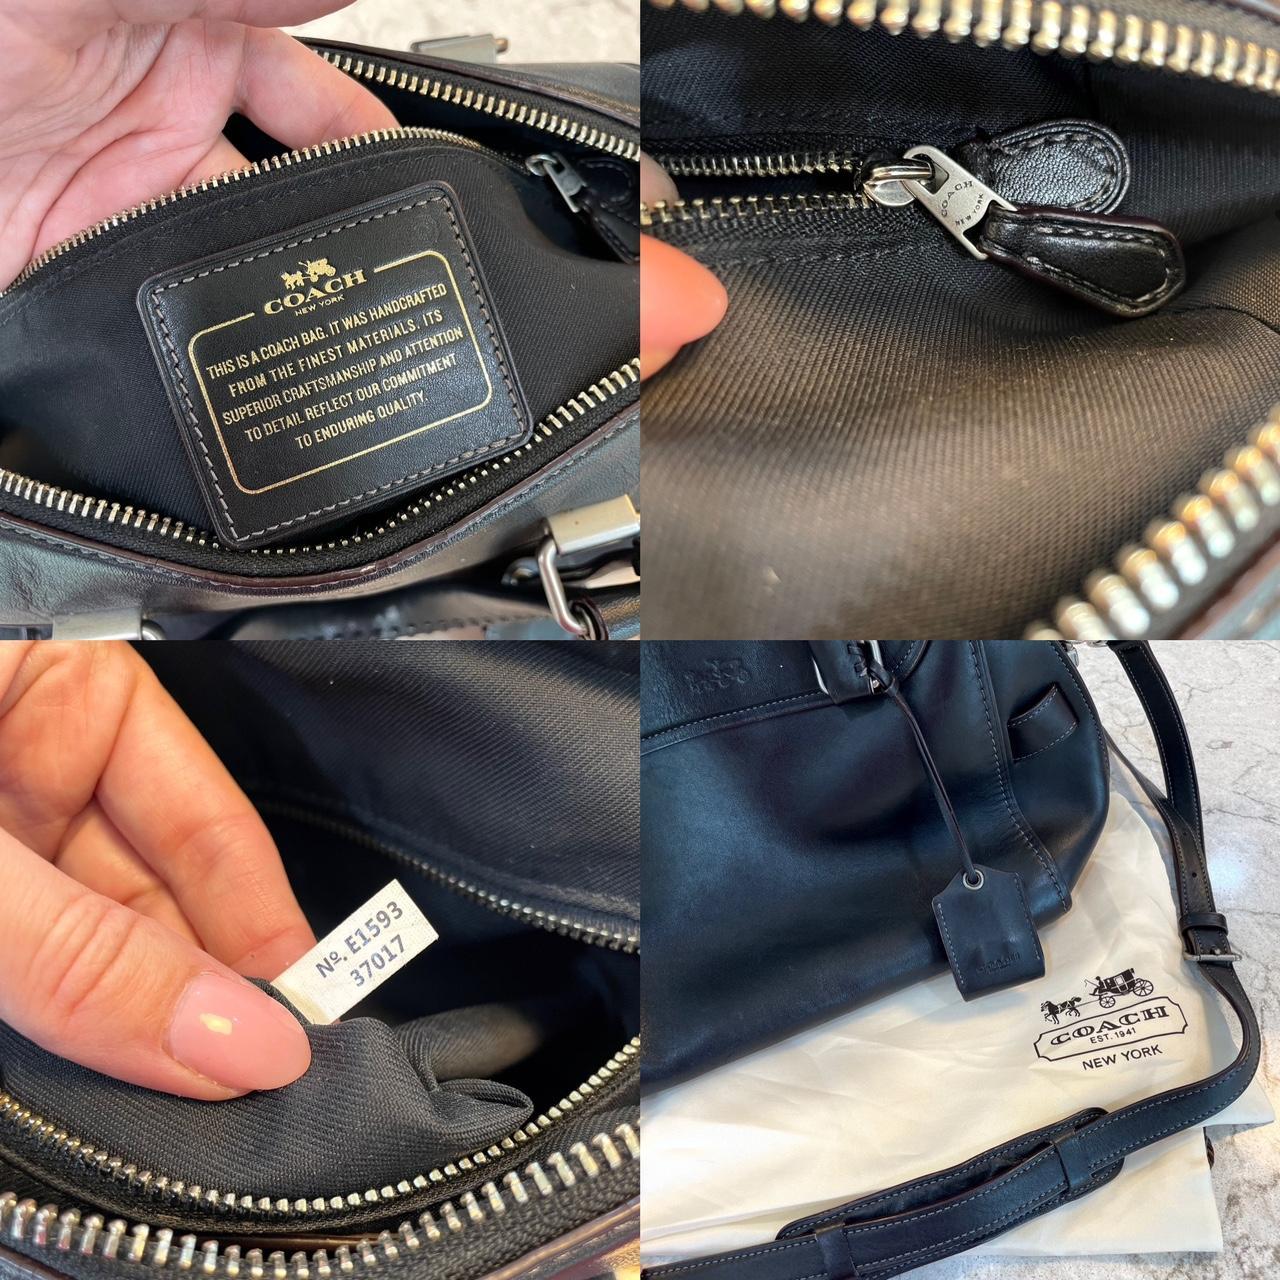 Coach Ace Satchel Leather Handbag 37017 Black - Coach Bag